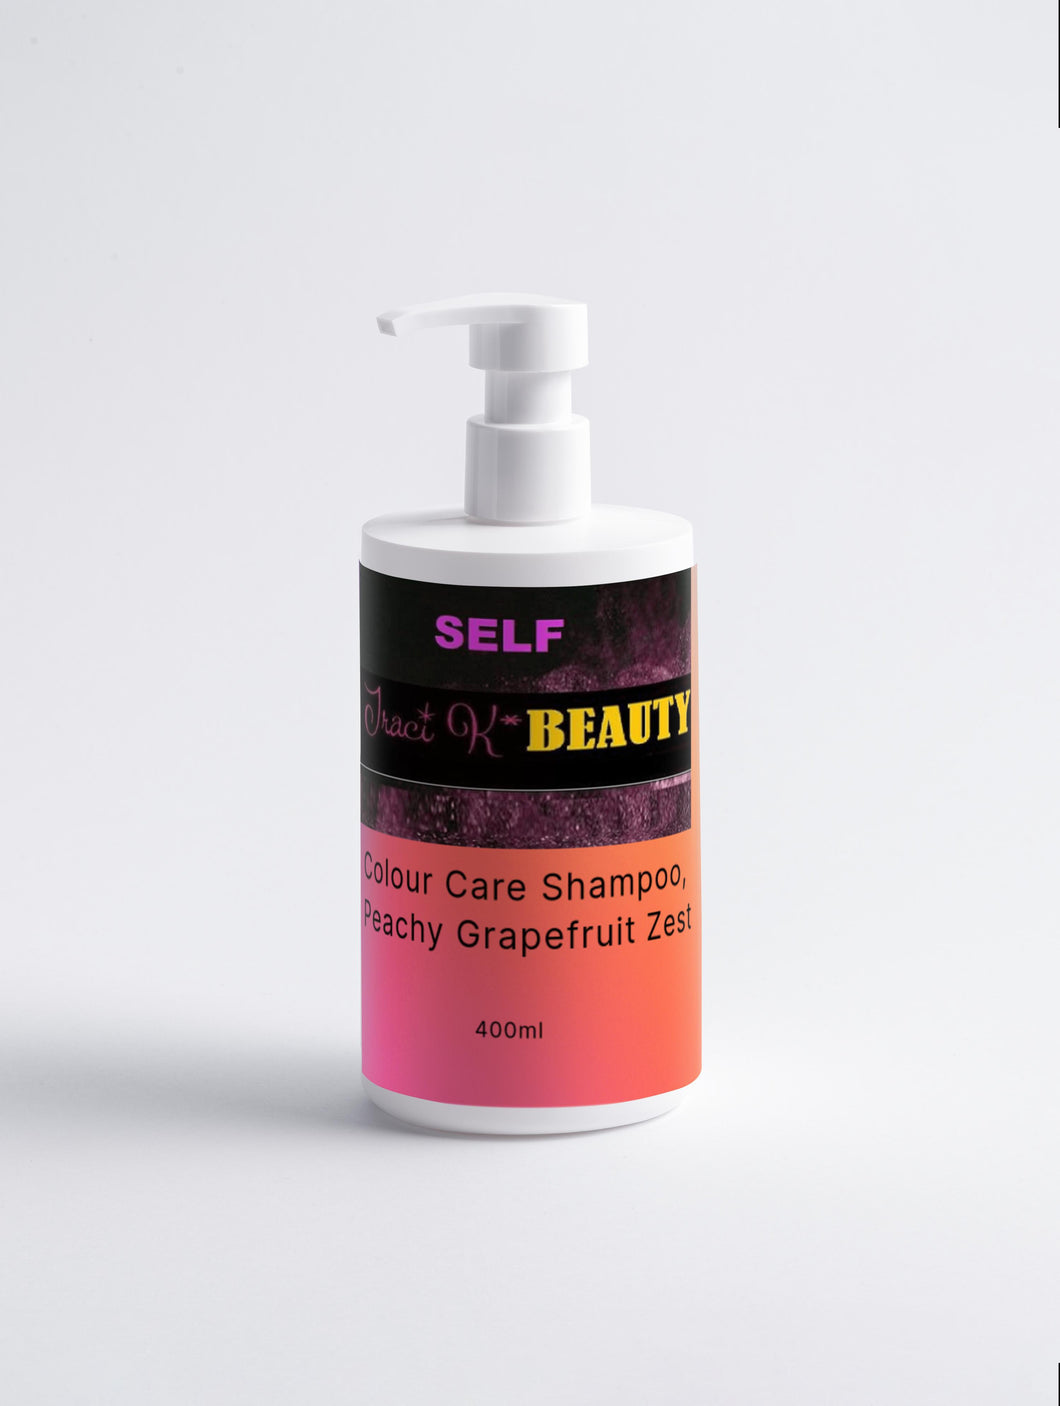 SELF by Traci K Beauty Colour Care Shampoo, Peachy Grapefruit Zest